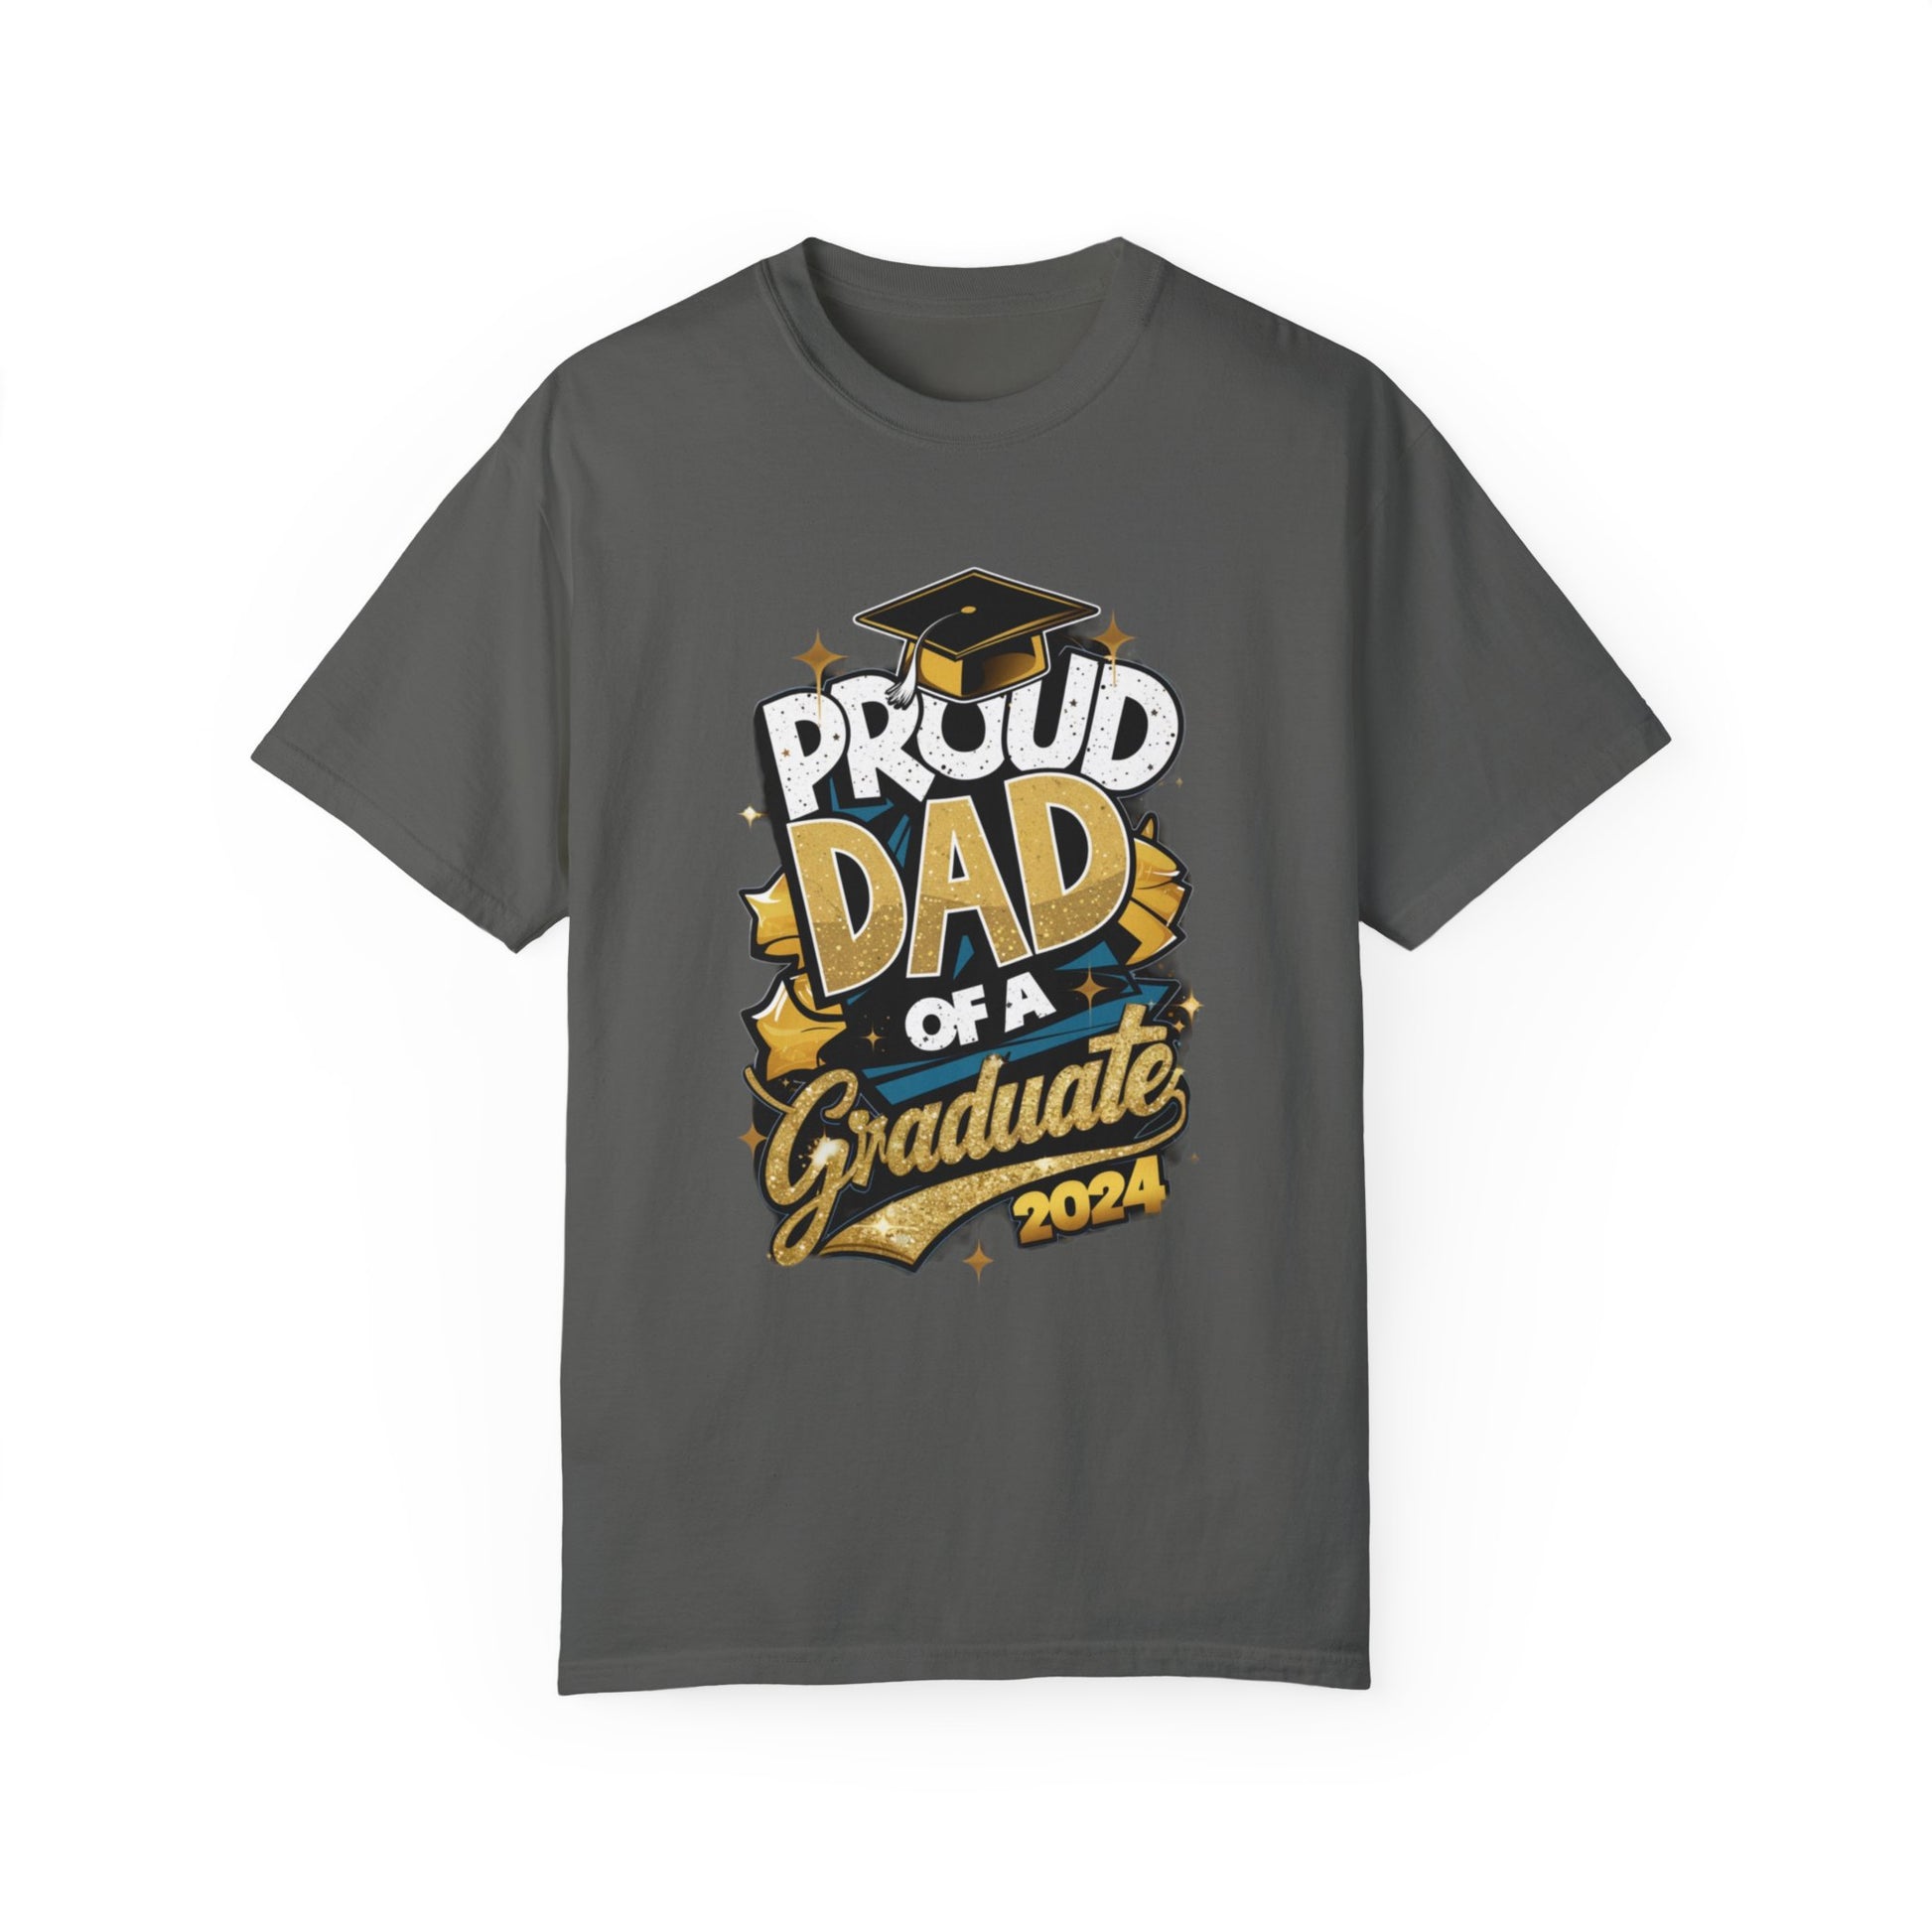 Proud Dad of a 2024 Graduate Unisex Garment-dyed T-shirt Cotton Funny Humorous Graphic Soft Premium Unisex Men Women Pepper T-shirt Birthday Gift-12